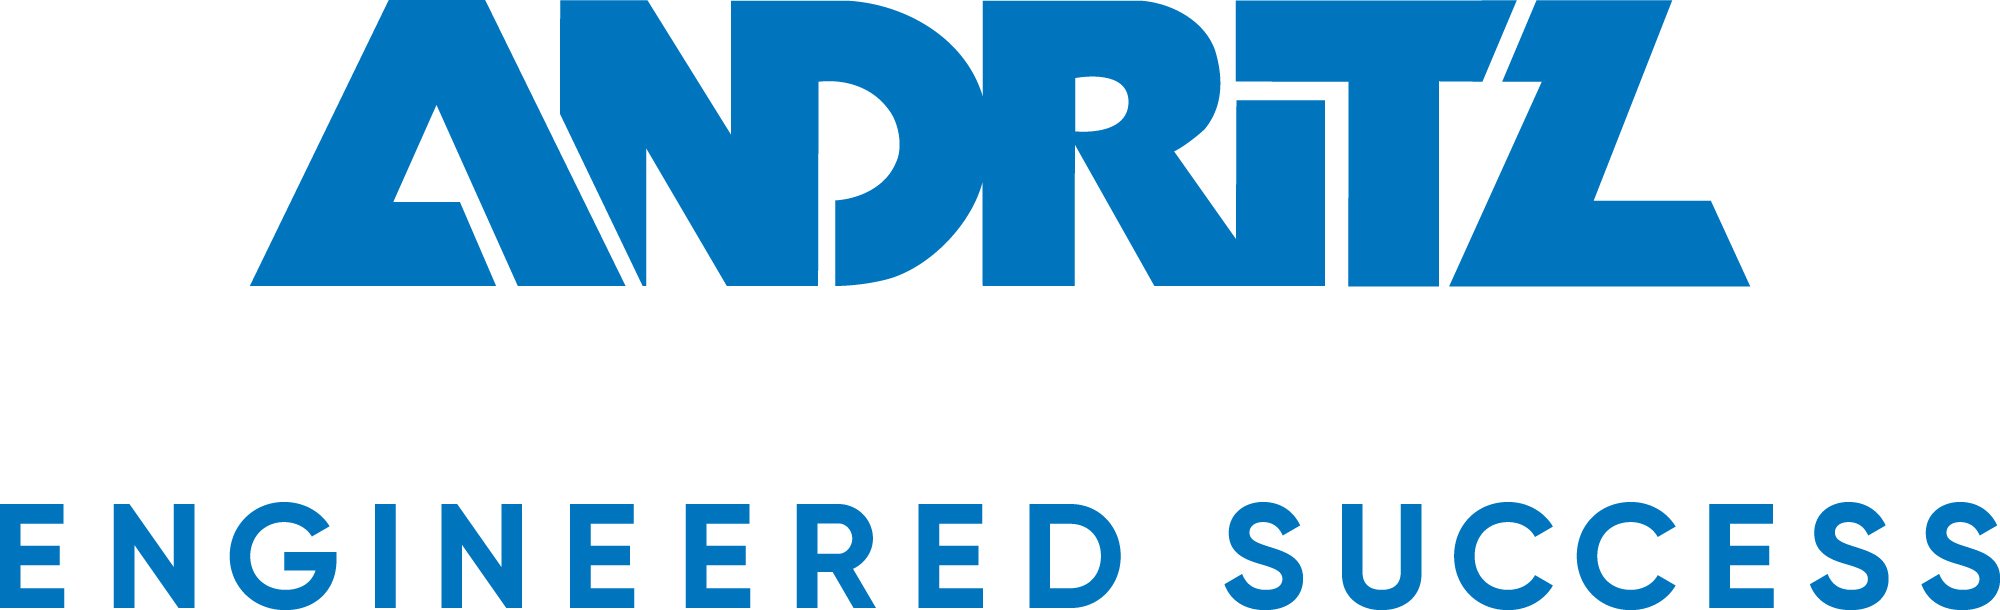 ANDRITZ_Logo&Claim_blue_RGB